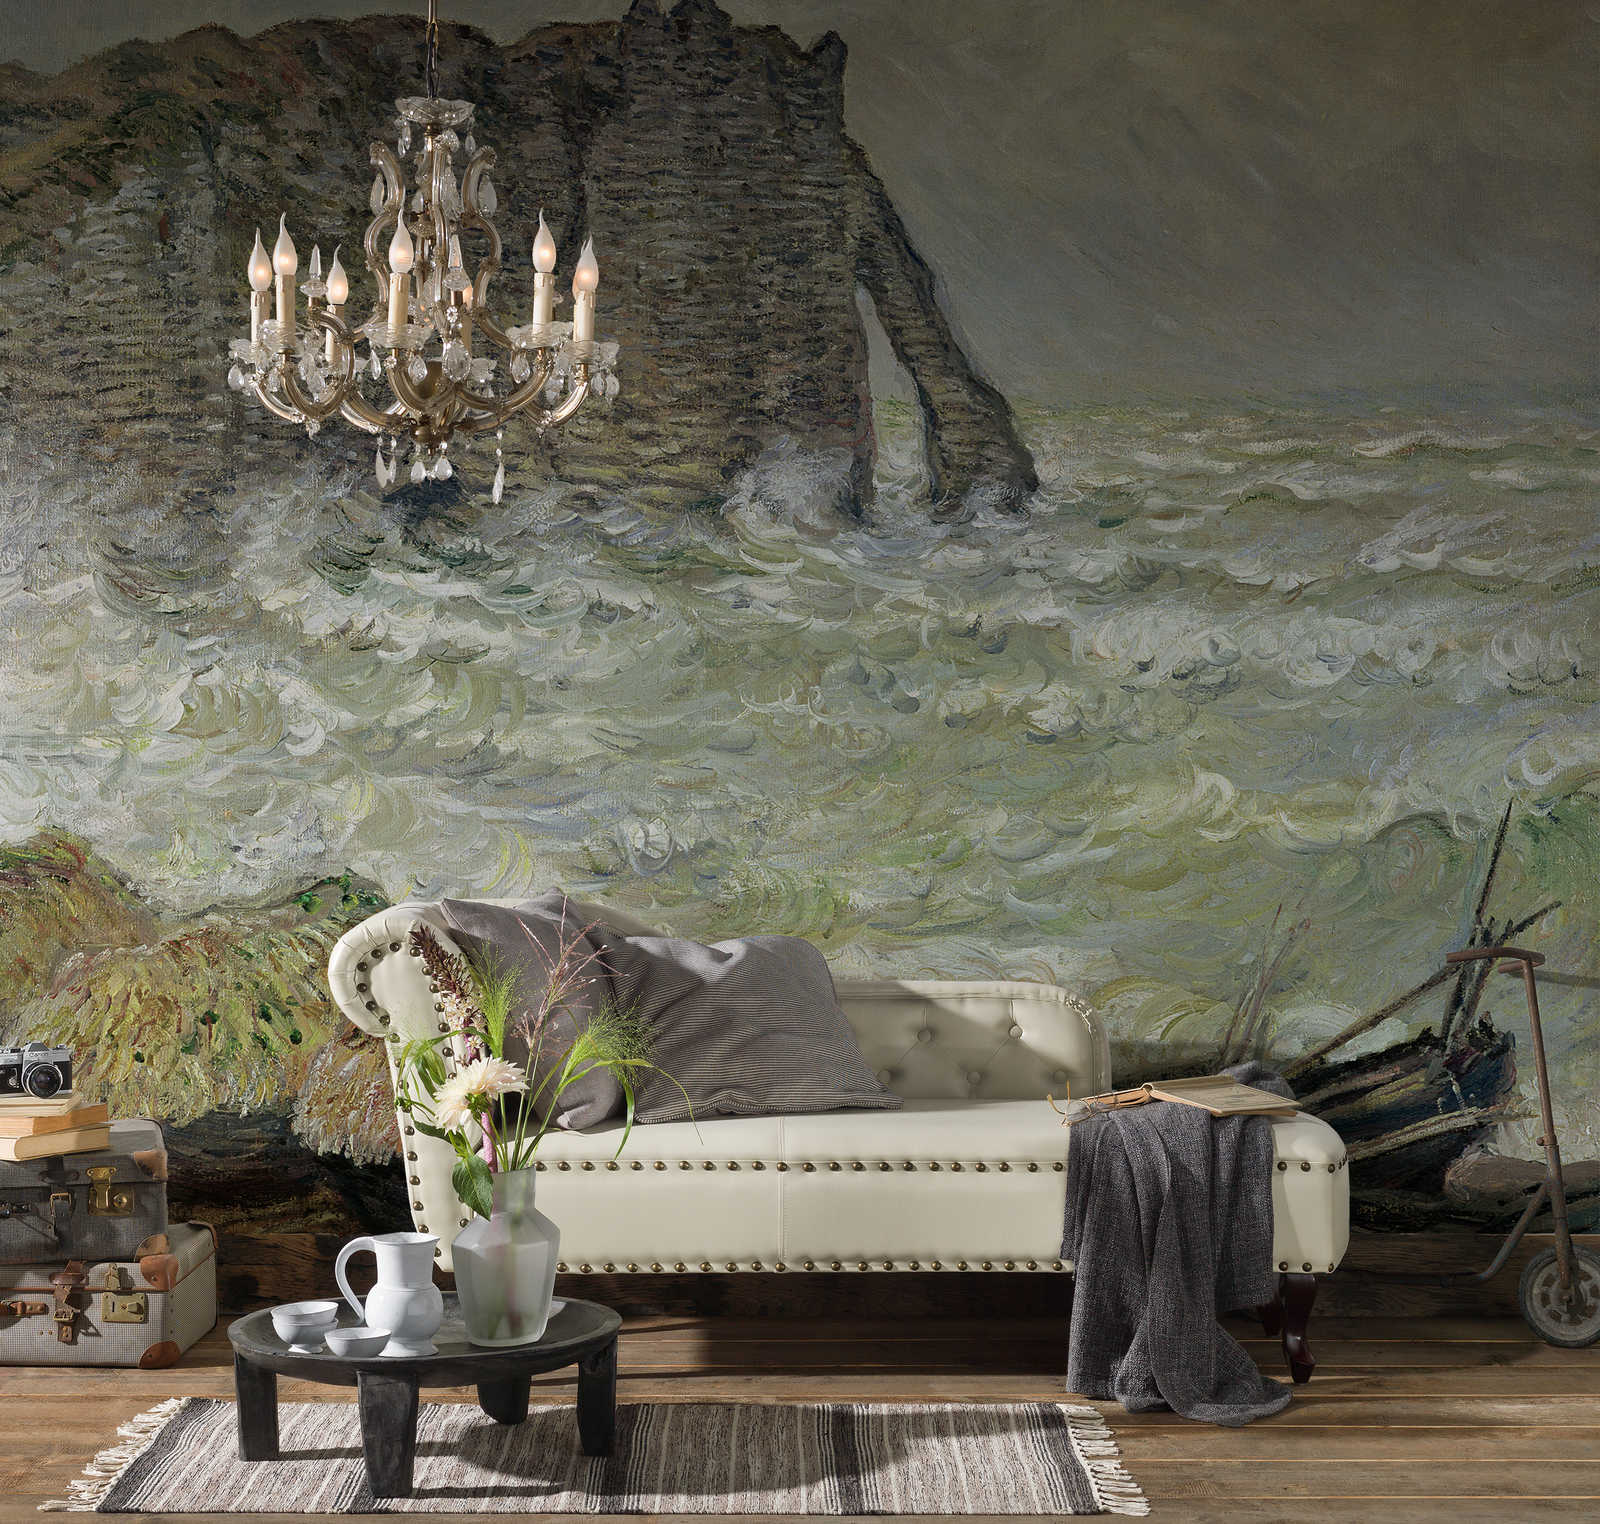             Photo wallpaper "Rough sea near Etretat" by Claude Monet
        